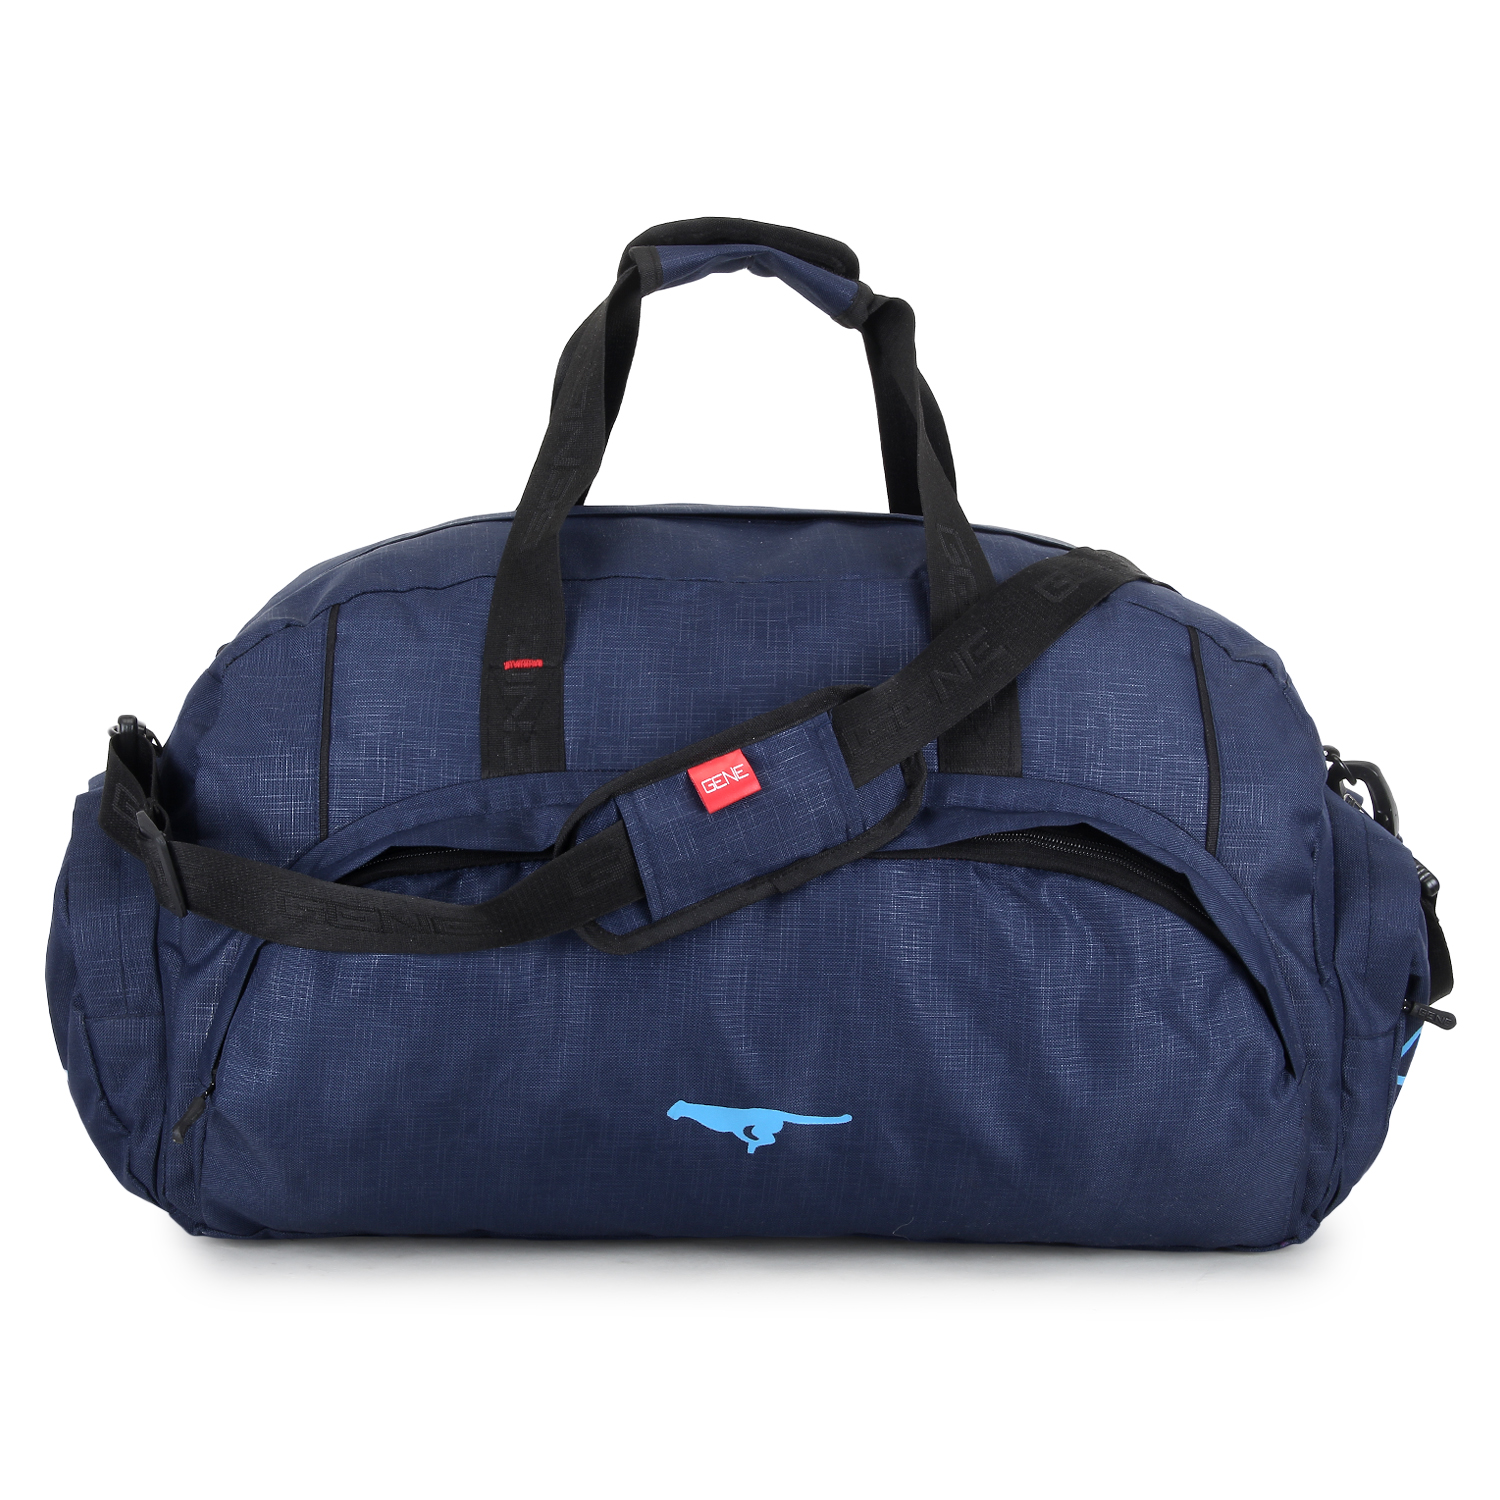 Monica Sales Gene Bags® MN-0319 Duffle/ Gym Bag with shoe cave for Men  |Capacity- 32 Liters Gym Duffel Bag Purple - Price in India | Flipkart.com